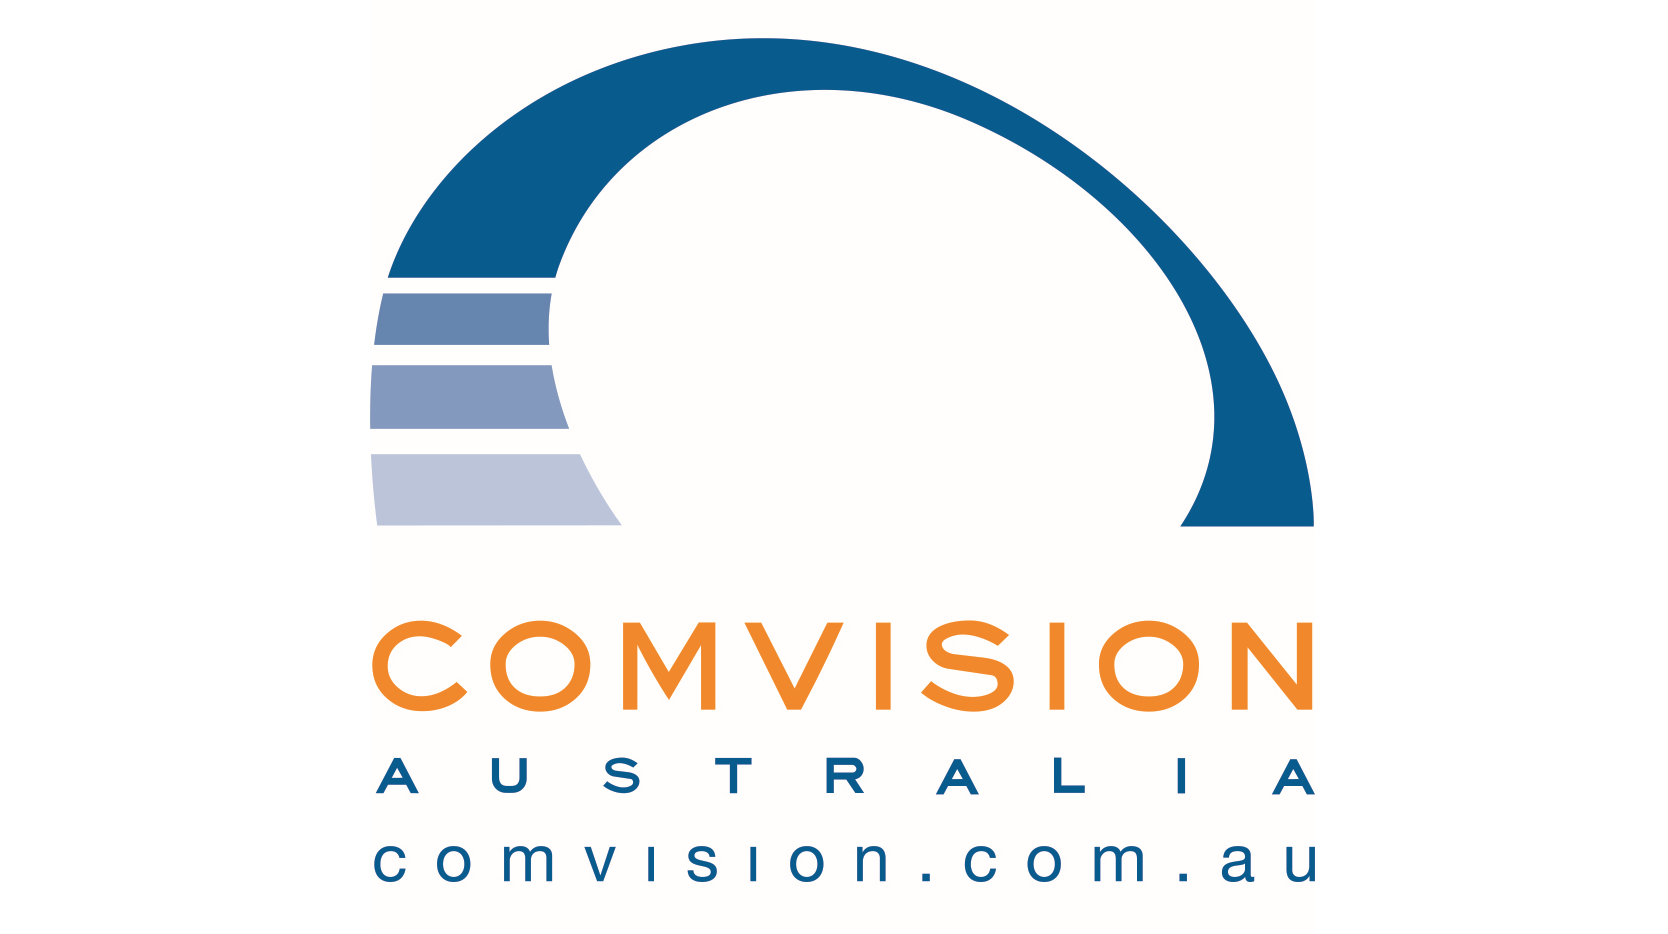 Comvision Australia